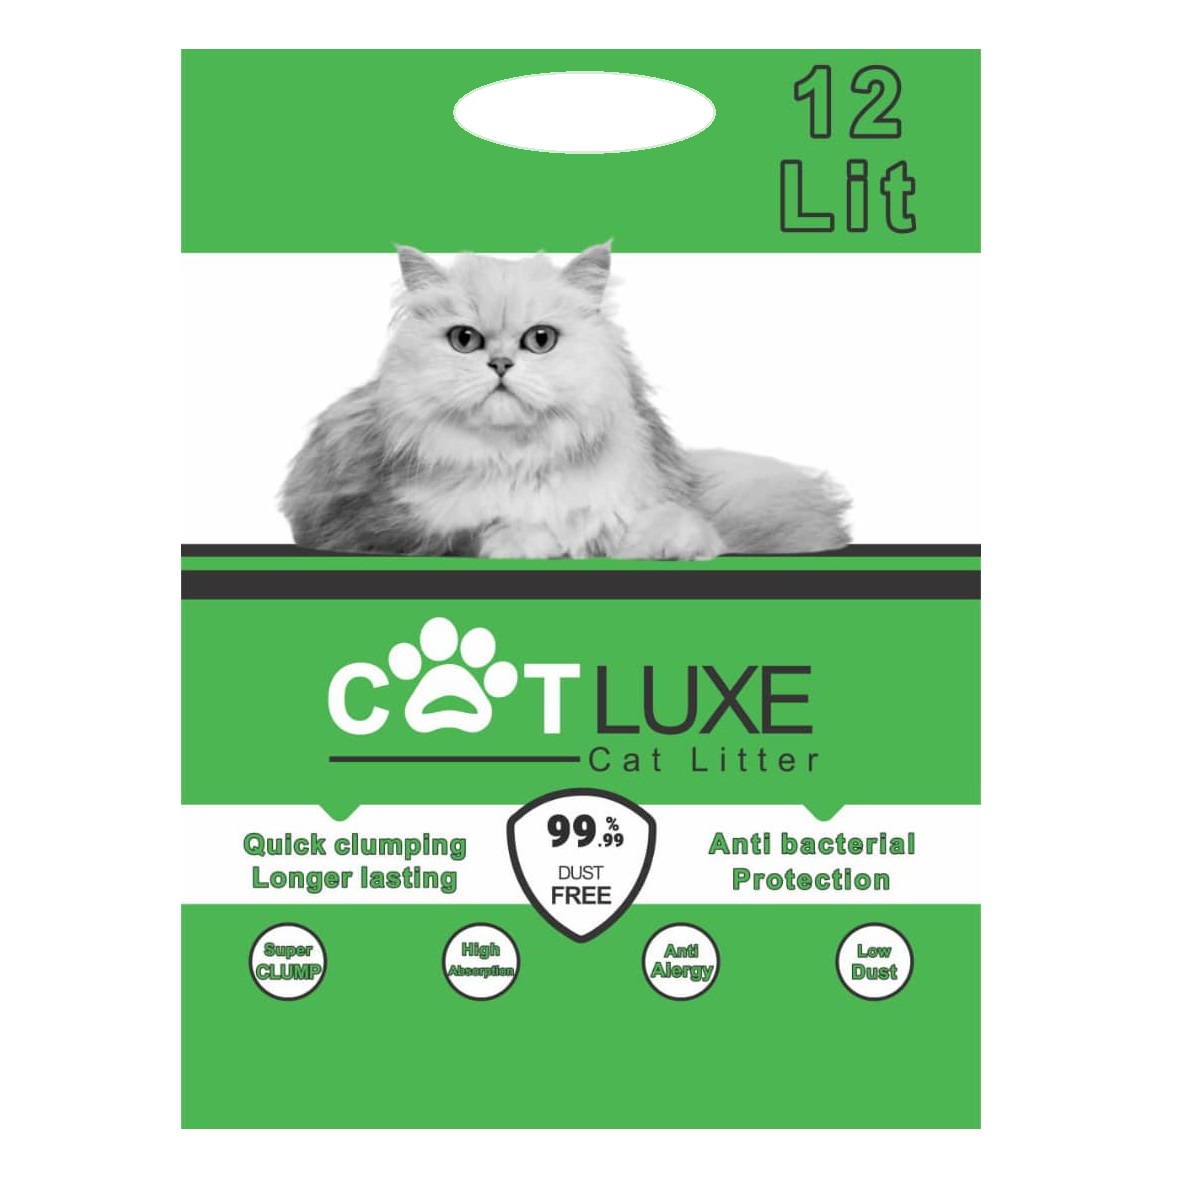 نگهداری از توله سگ - خاک گربه کت لوکس گرانول وزن 10 کیلوگرم